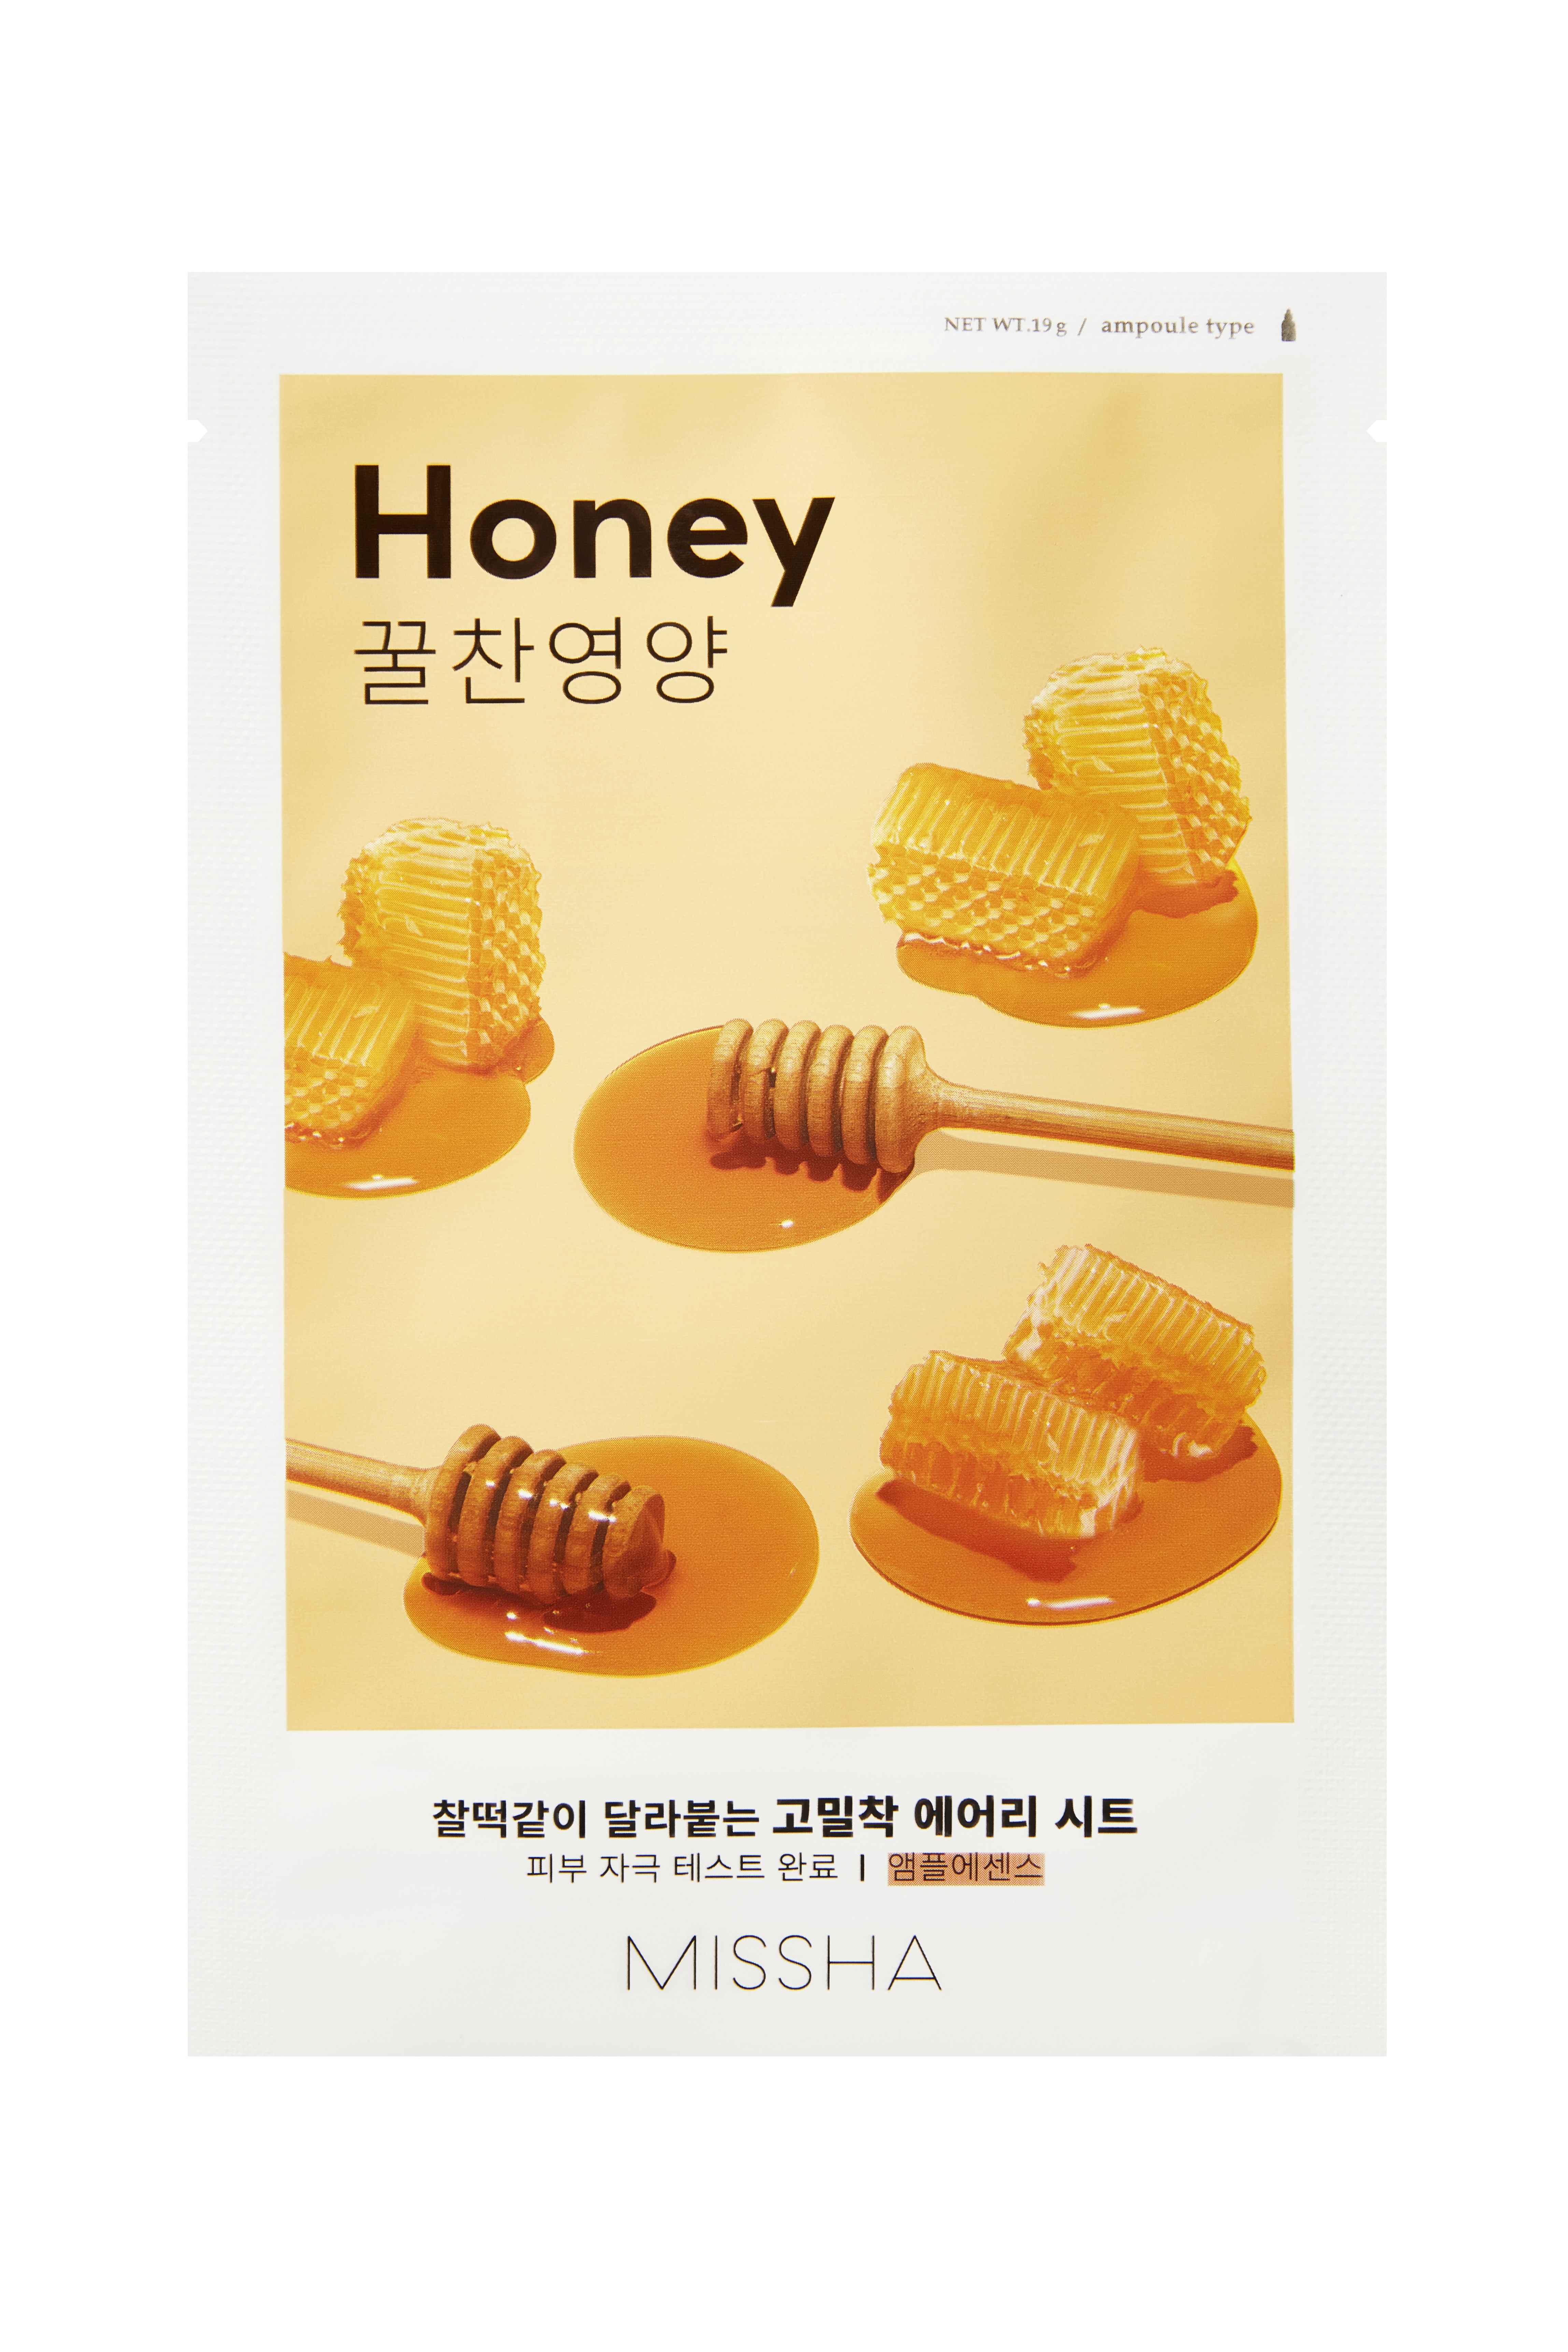 Missha Airy Fit Sheet Mask Honey 19 g  1 sheet